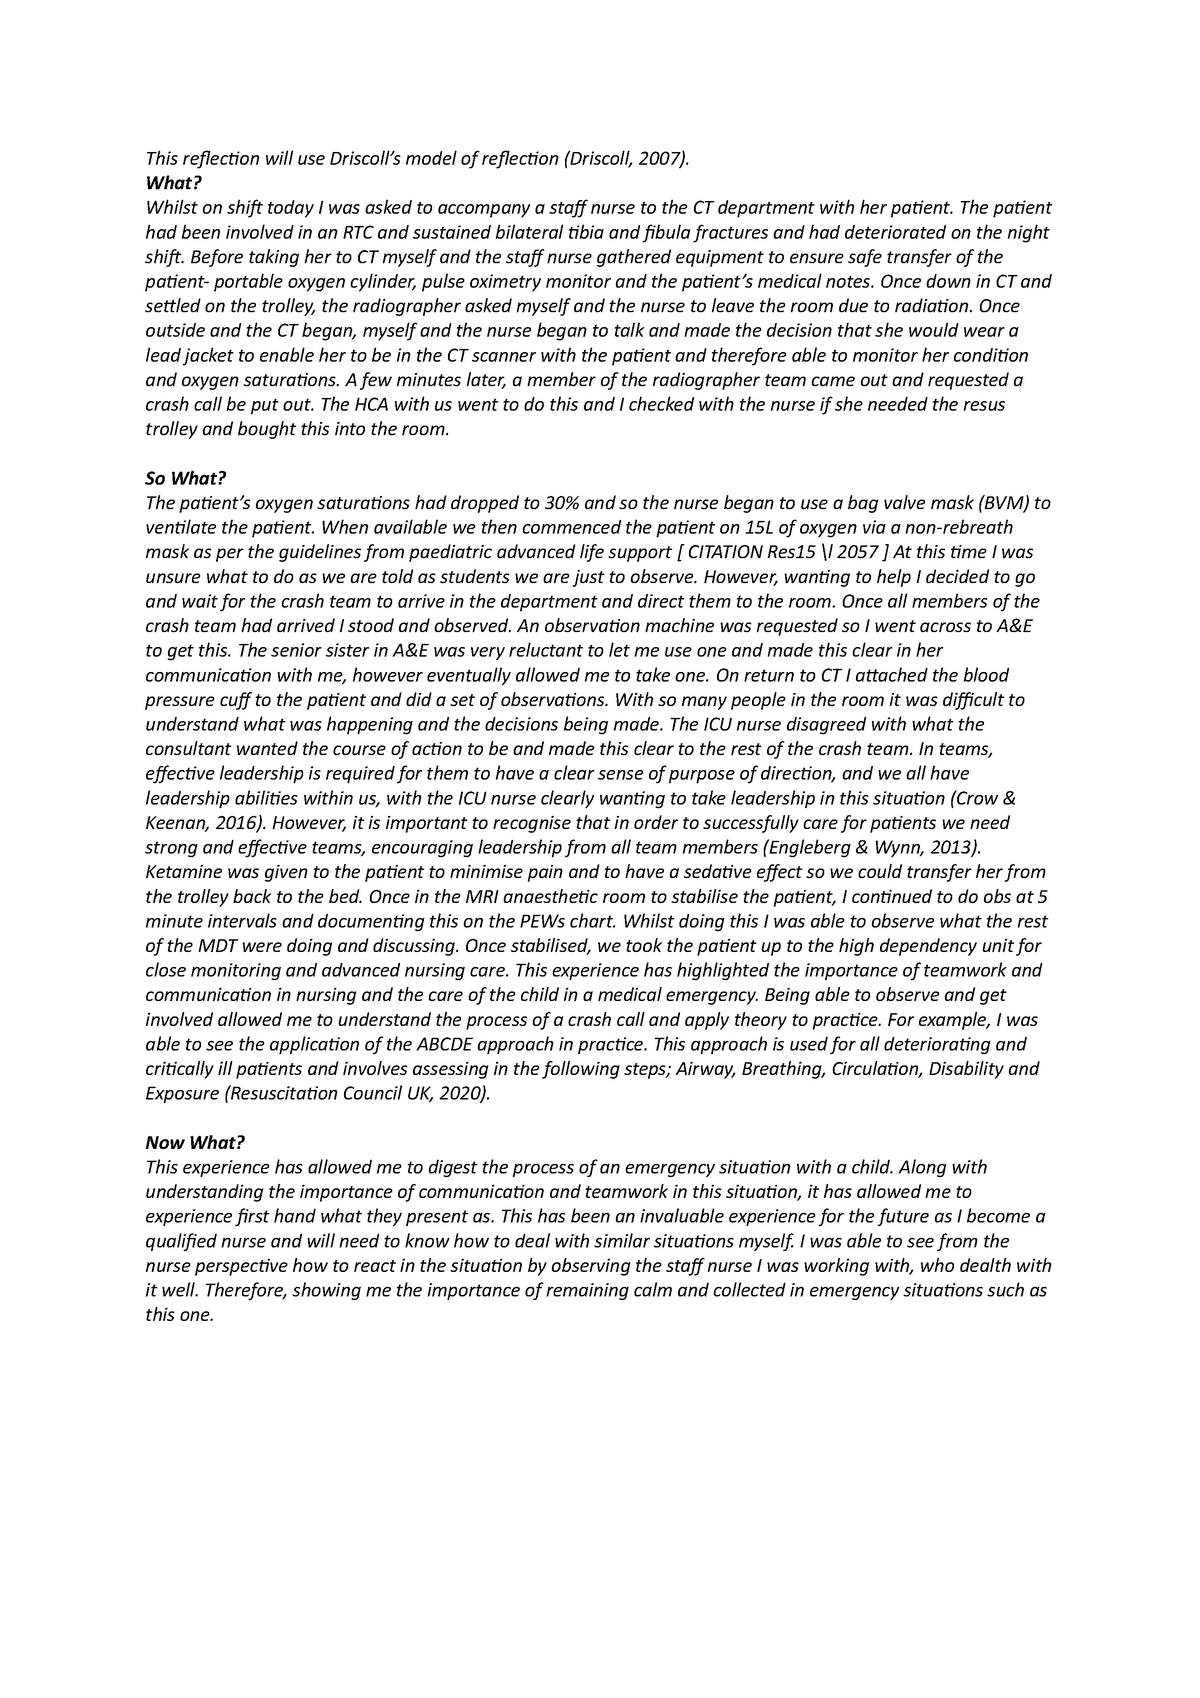 nursing reflective essay using driscoll model